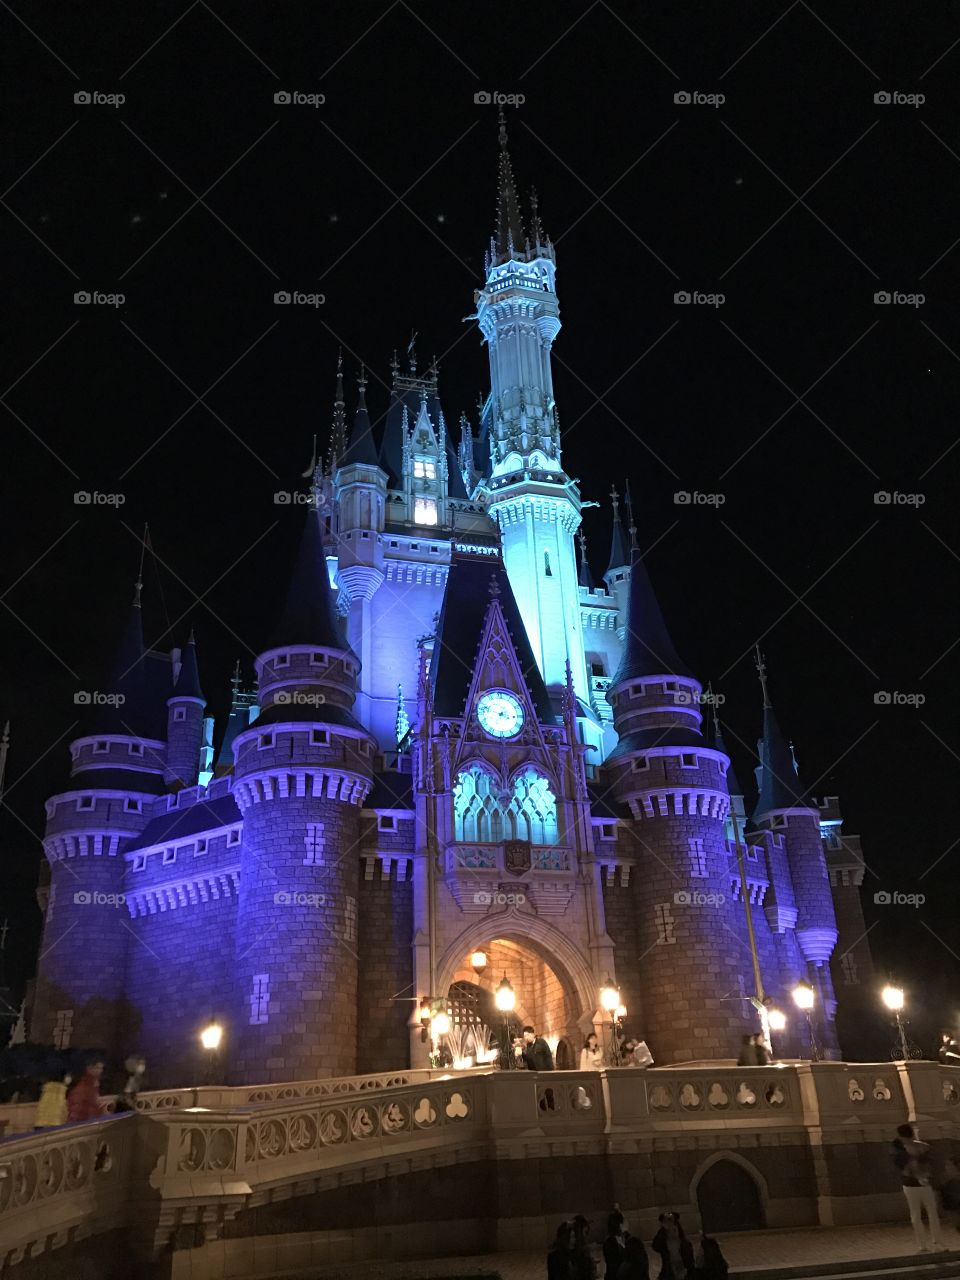 Tokyo Disney Land Cinderella's Castle at night